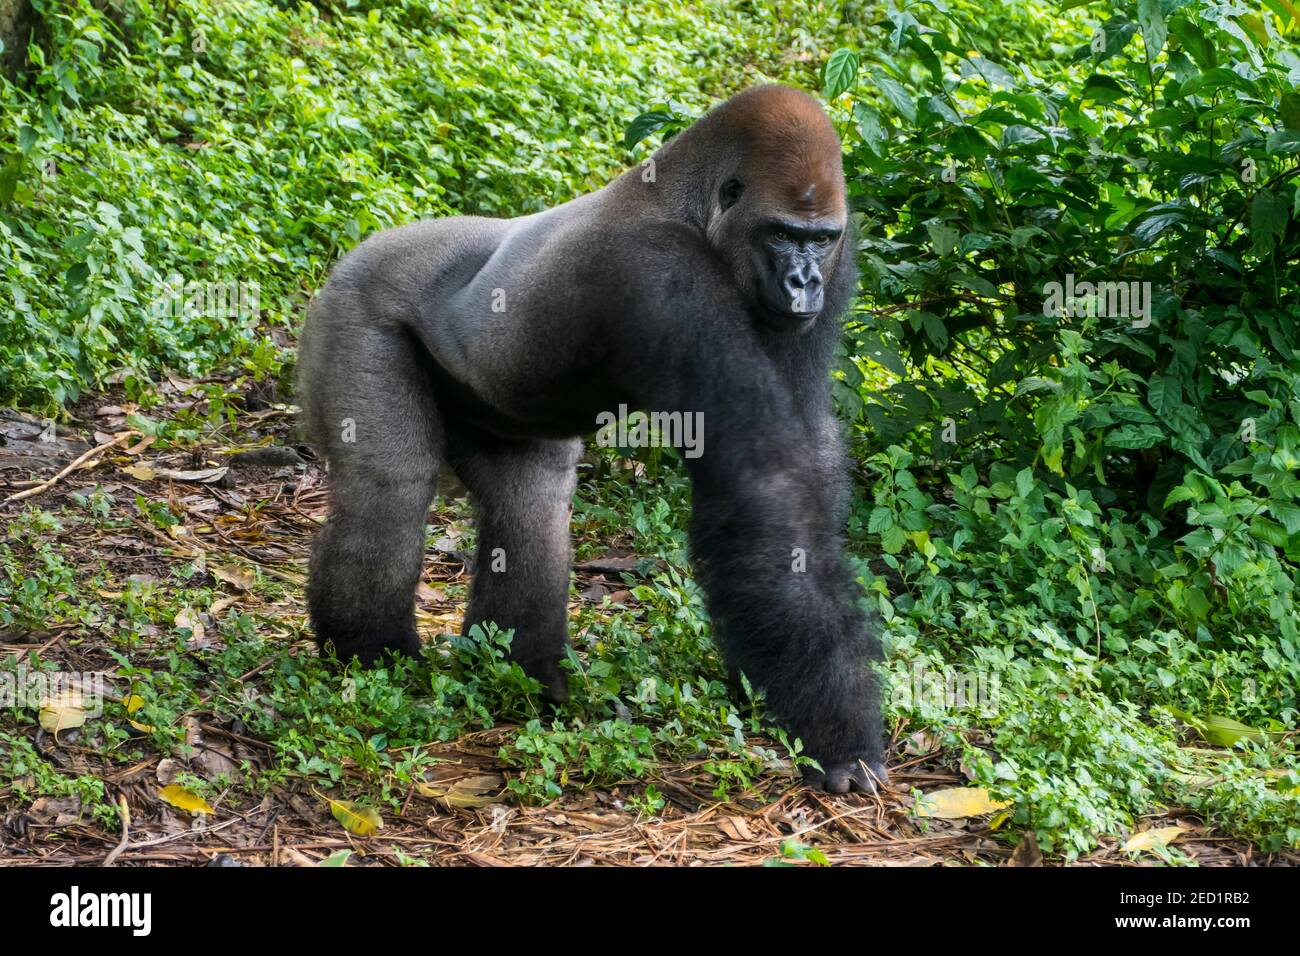 Western lowland gorilla (Gorilla gorilla gorilla), Limbe wildlife center, Cameroon Stock Photo